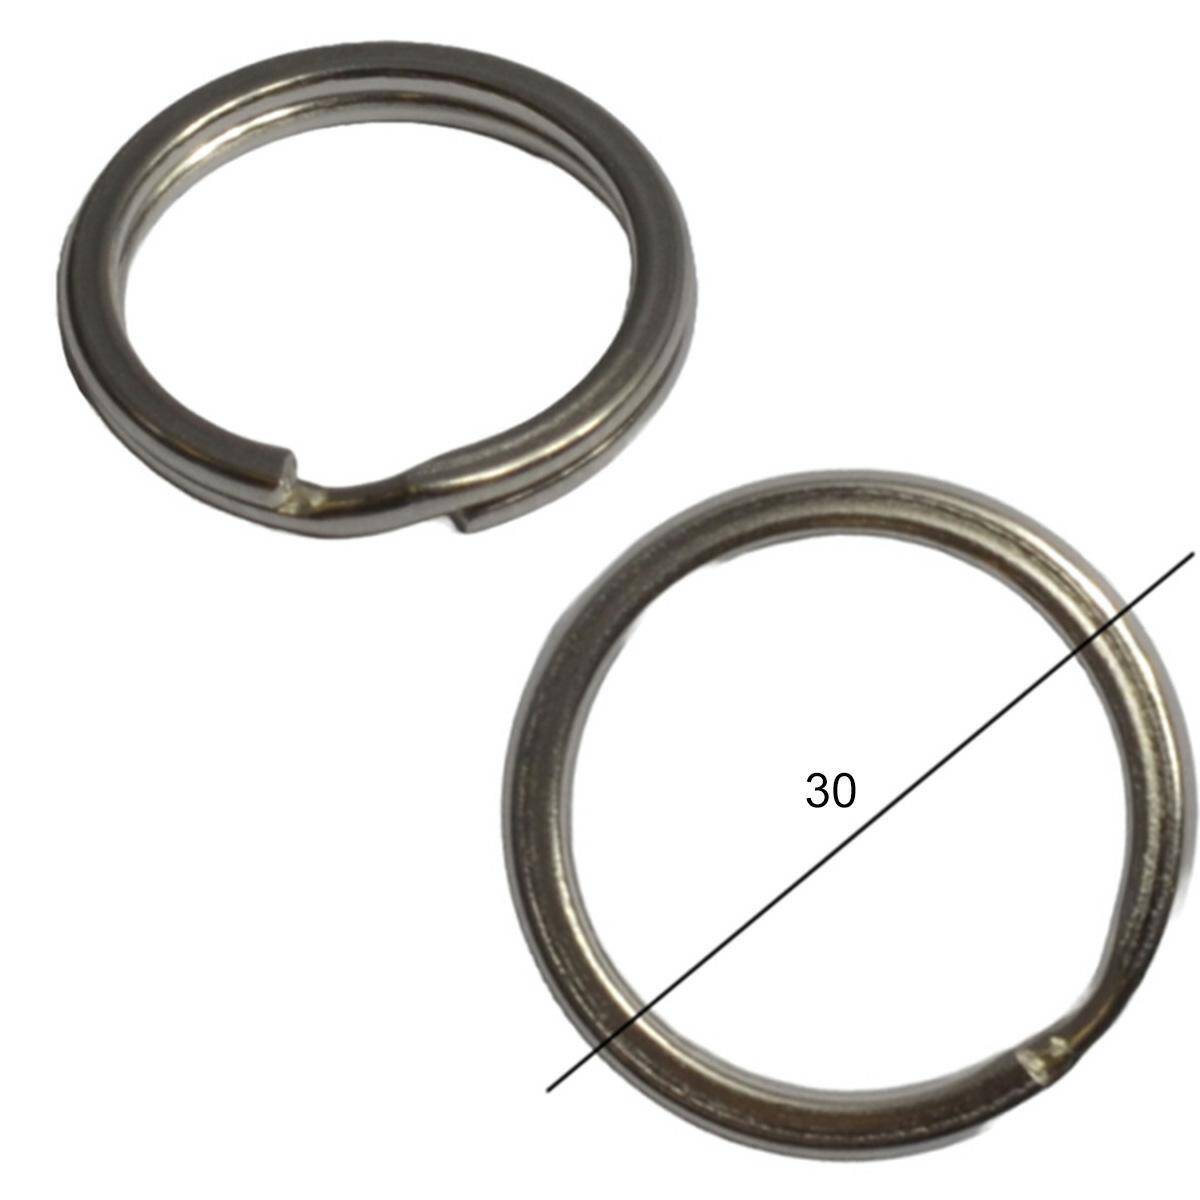 Key rings - flat - 30mm